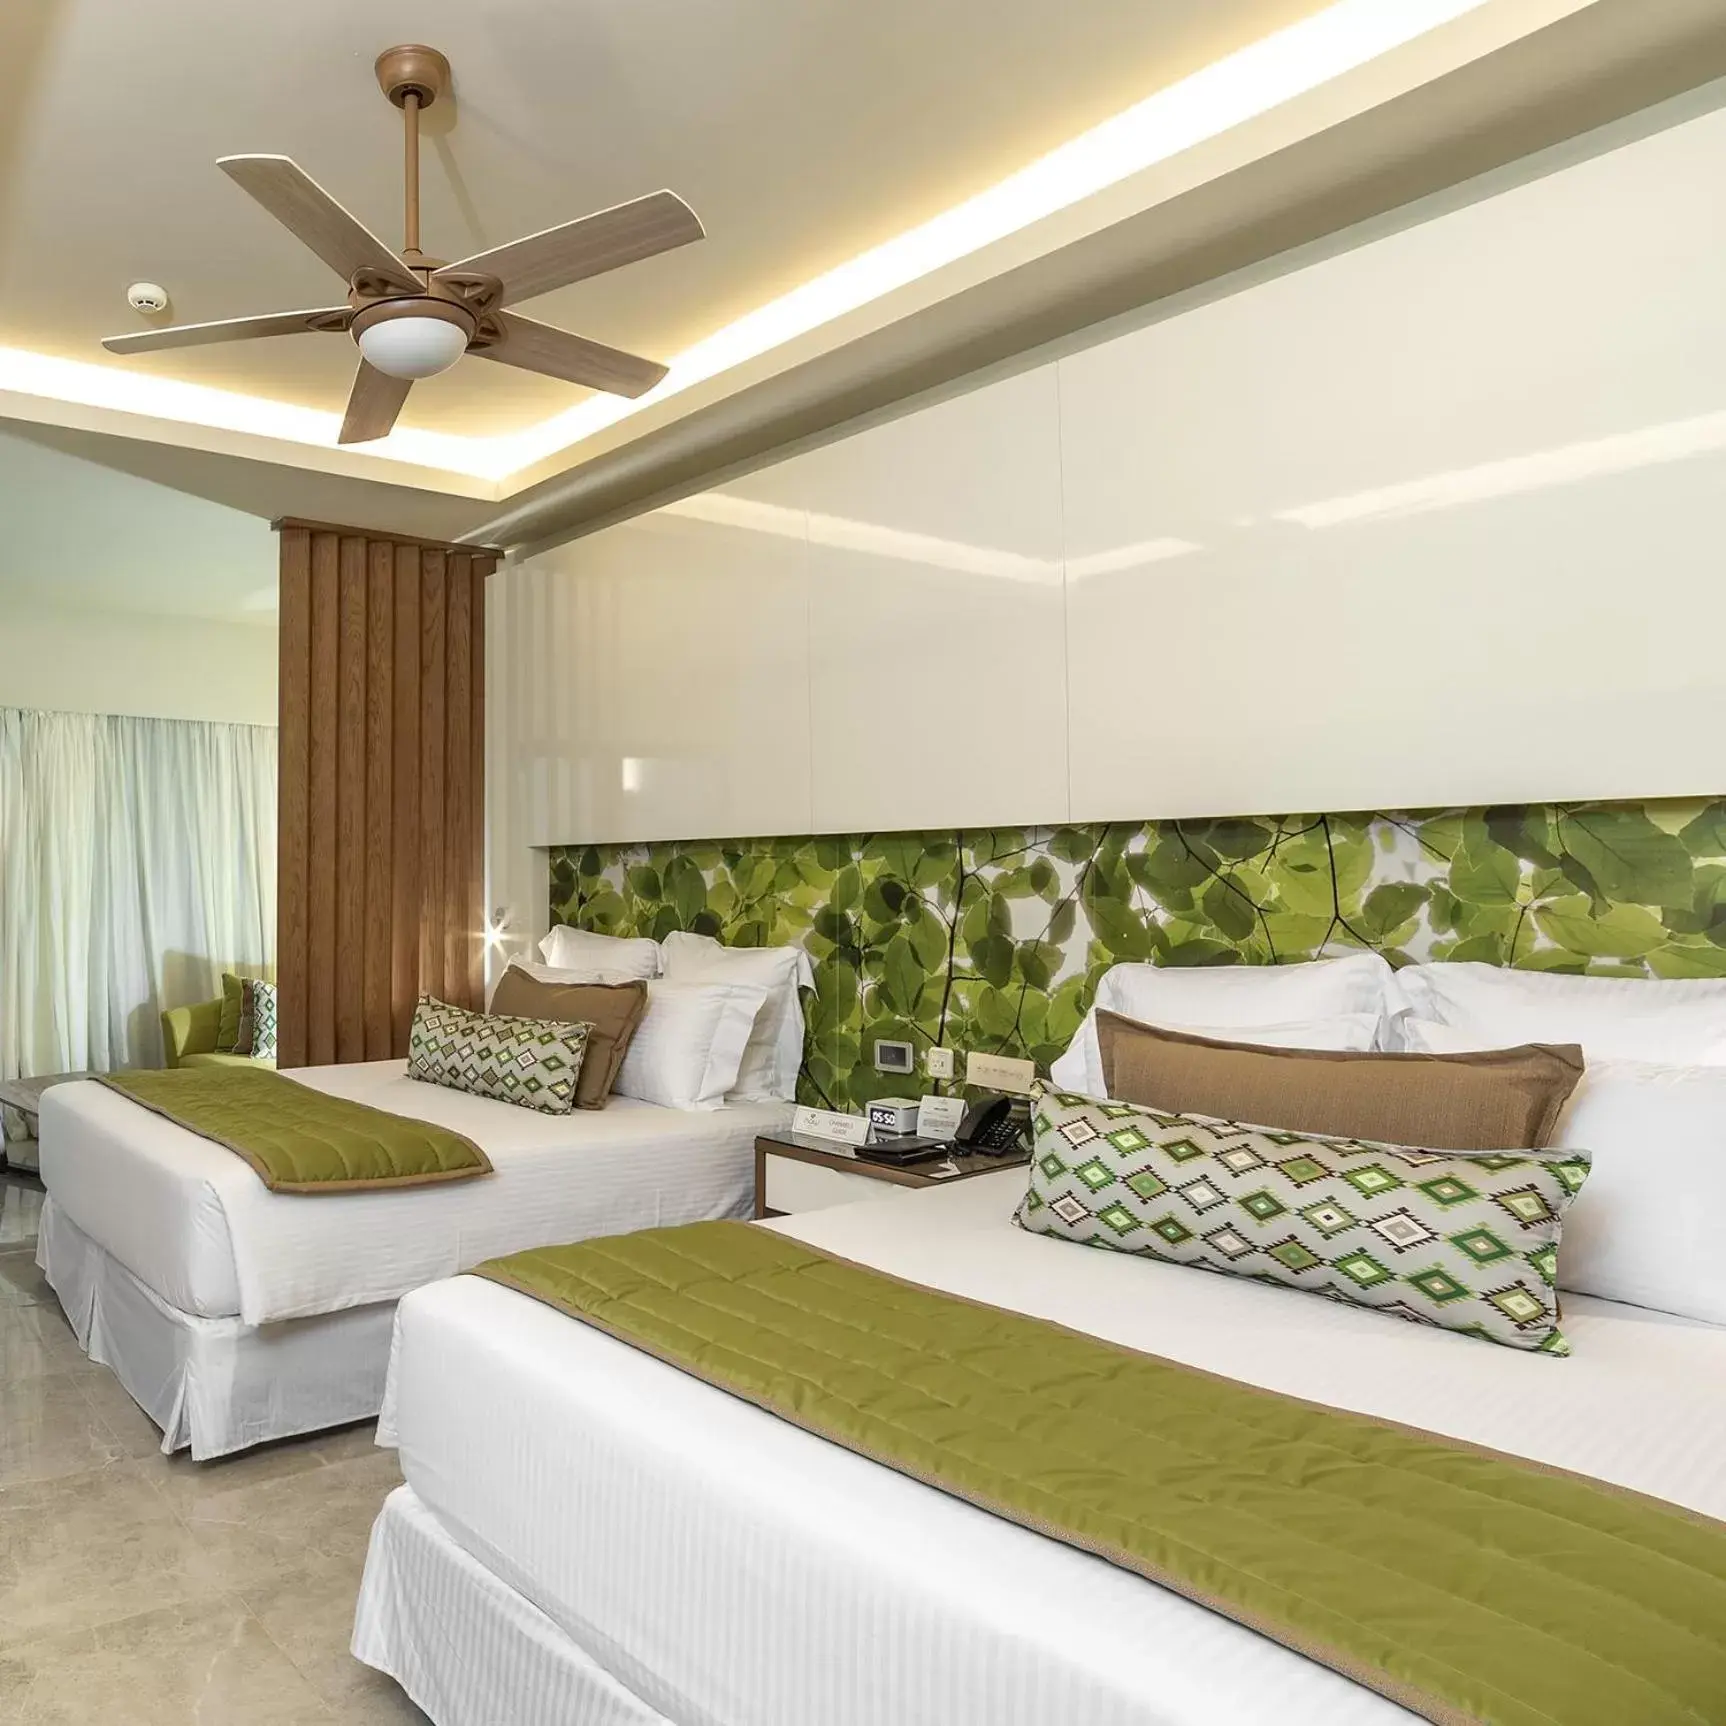 Bedroom, Bed in Dreams Onyx Resort & Spa - All Inclusive